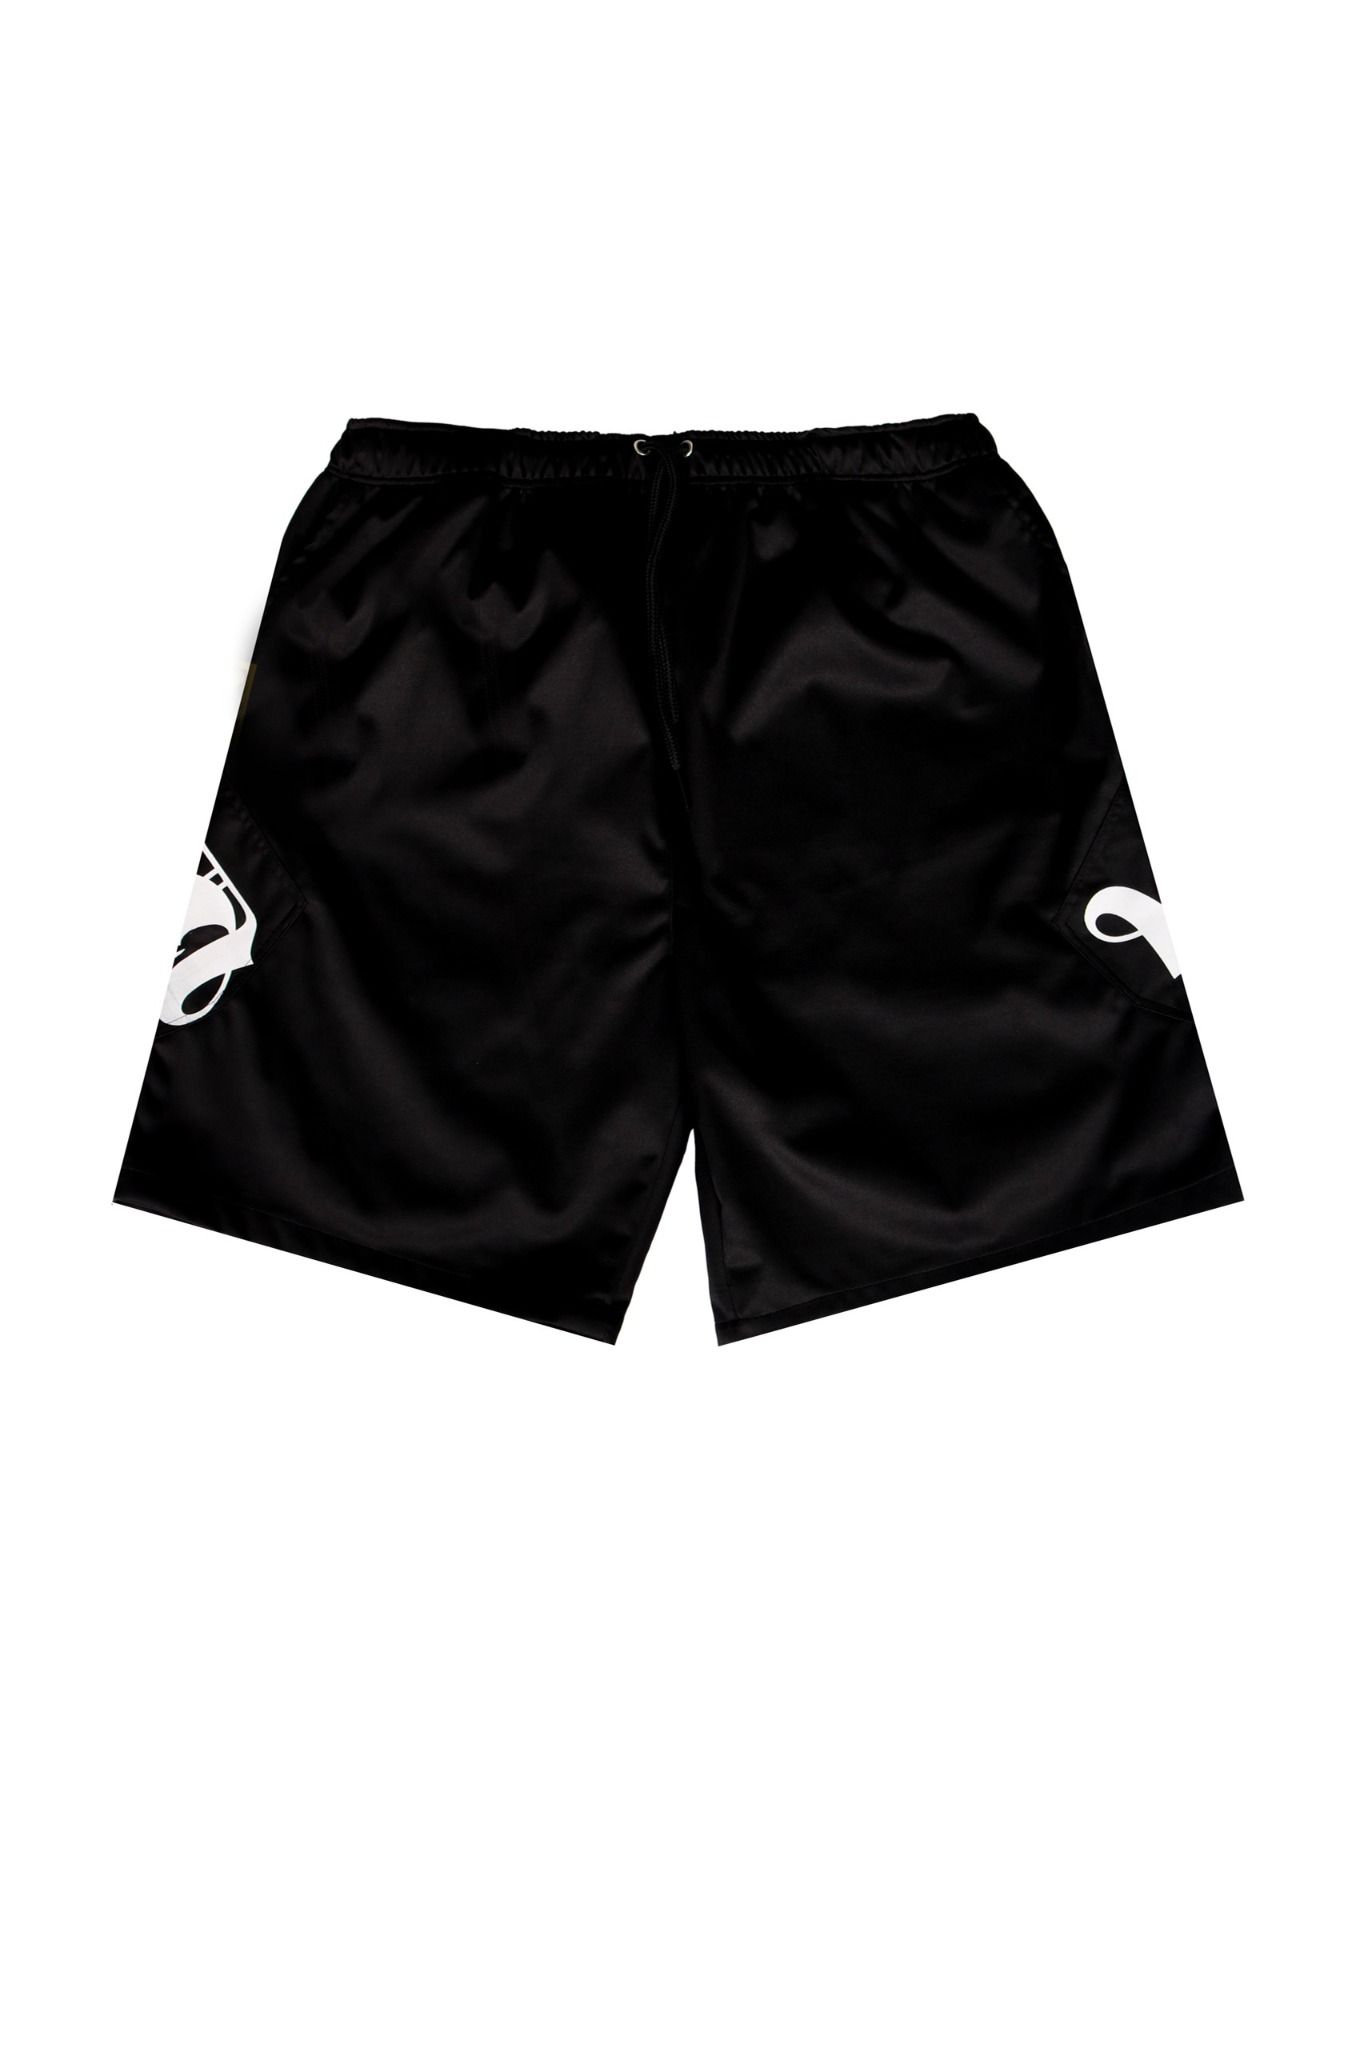  Apride 6 Pockets Shorts - Black&White 